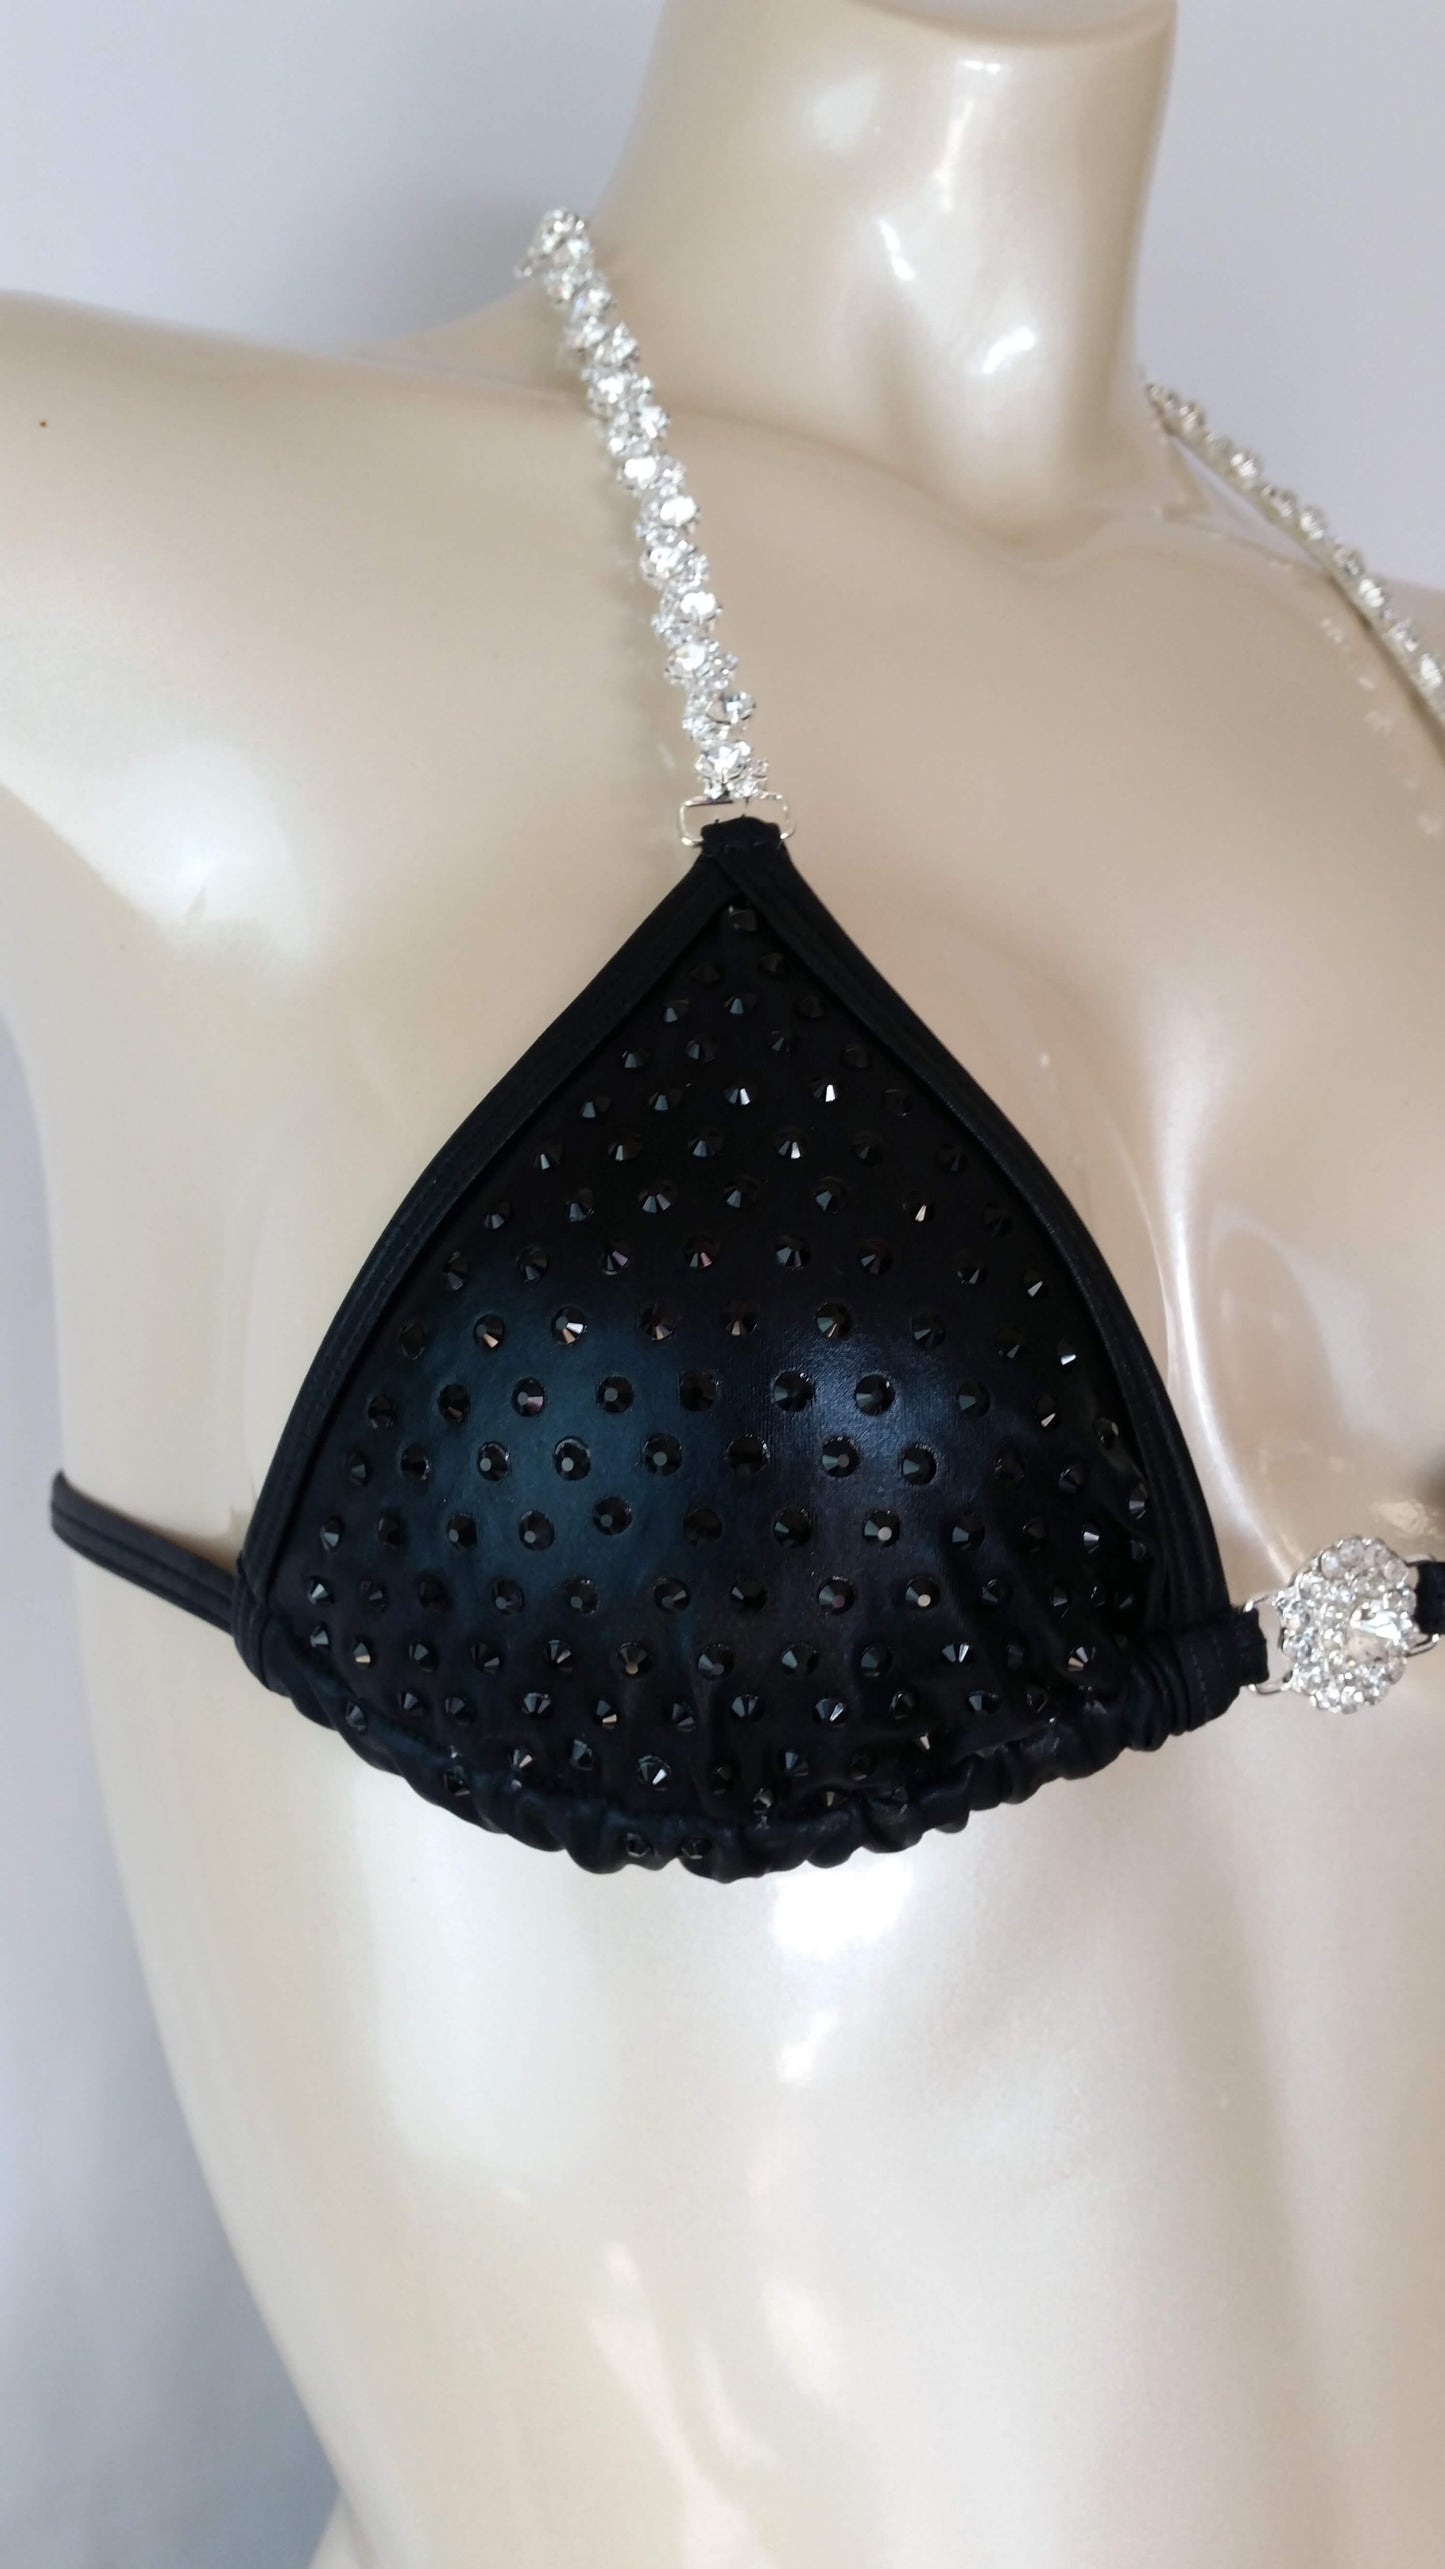 Black leather bikini with black rhinestone in a linear pattern design